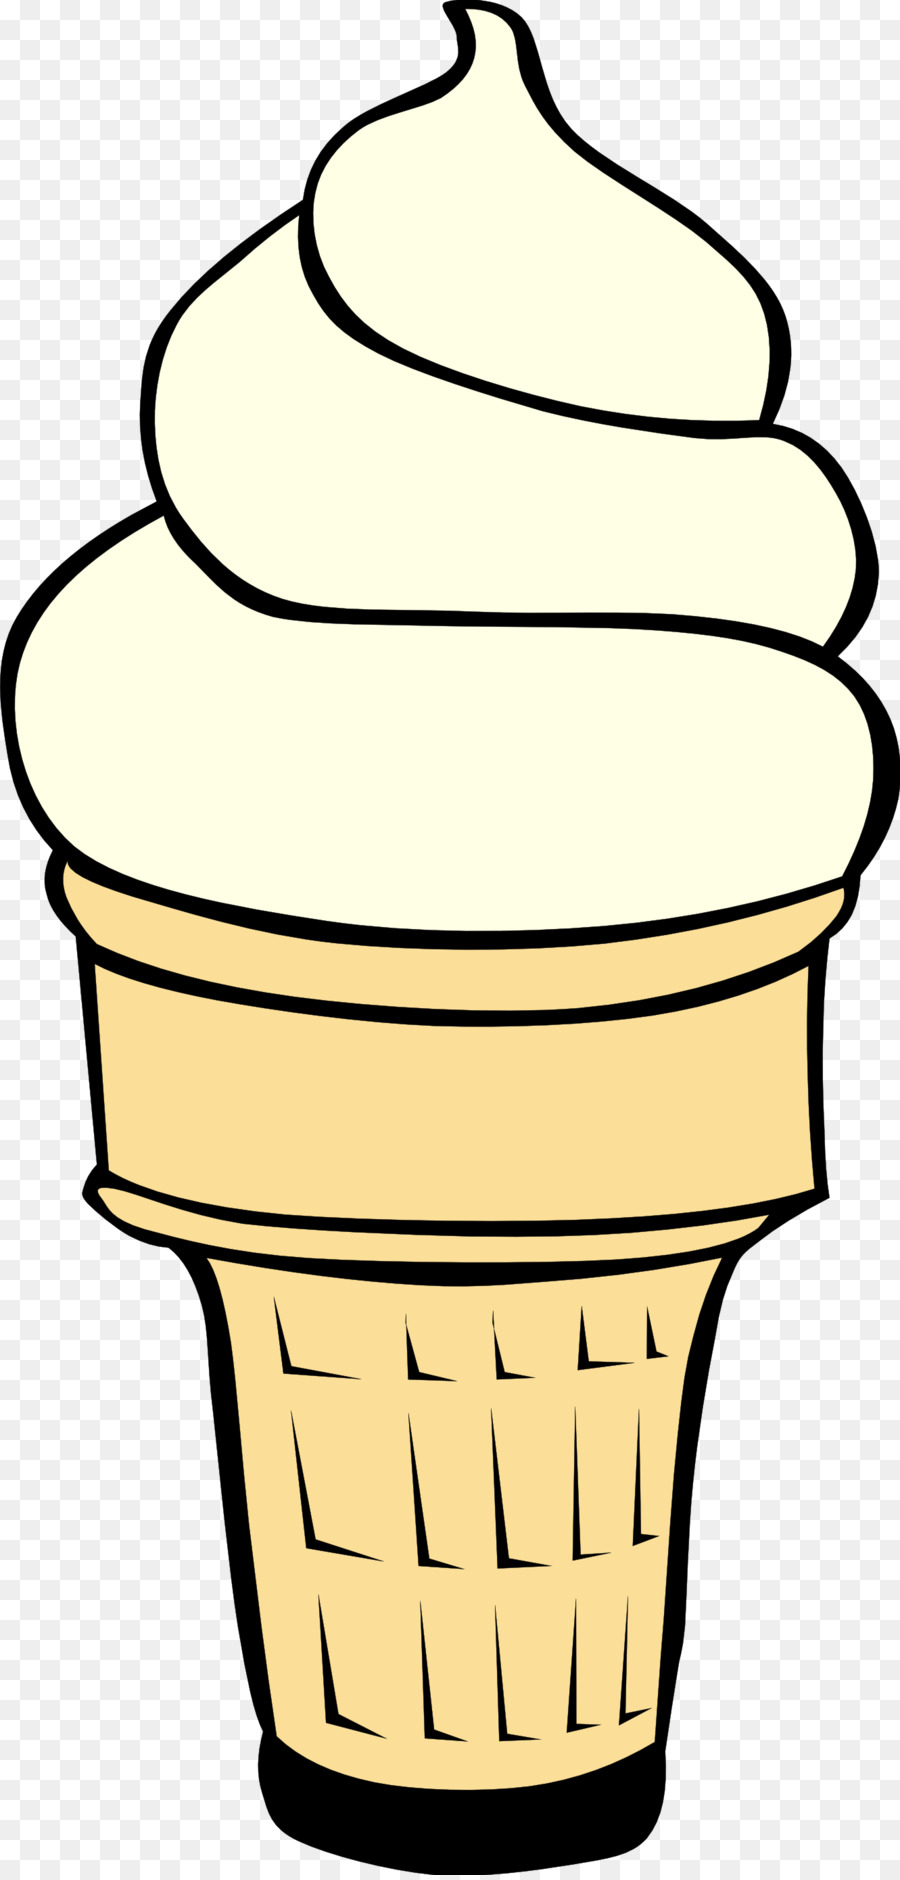 Ice cream cone Strawberry ice cream Clip art - Icecream Cliparts png download - 1331*2773 - Free Transparent Ice Cream png Download.